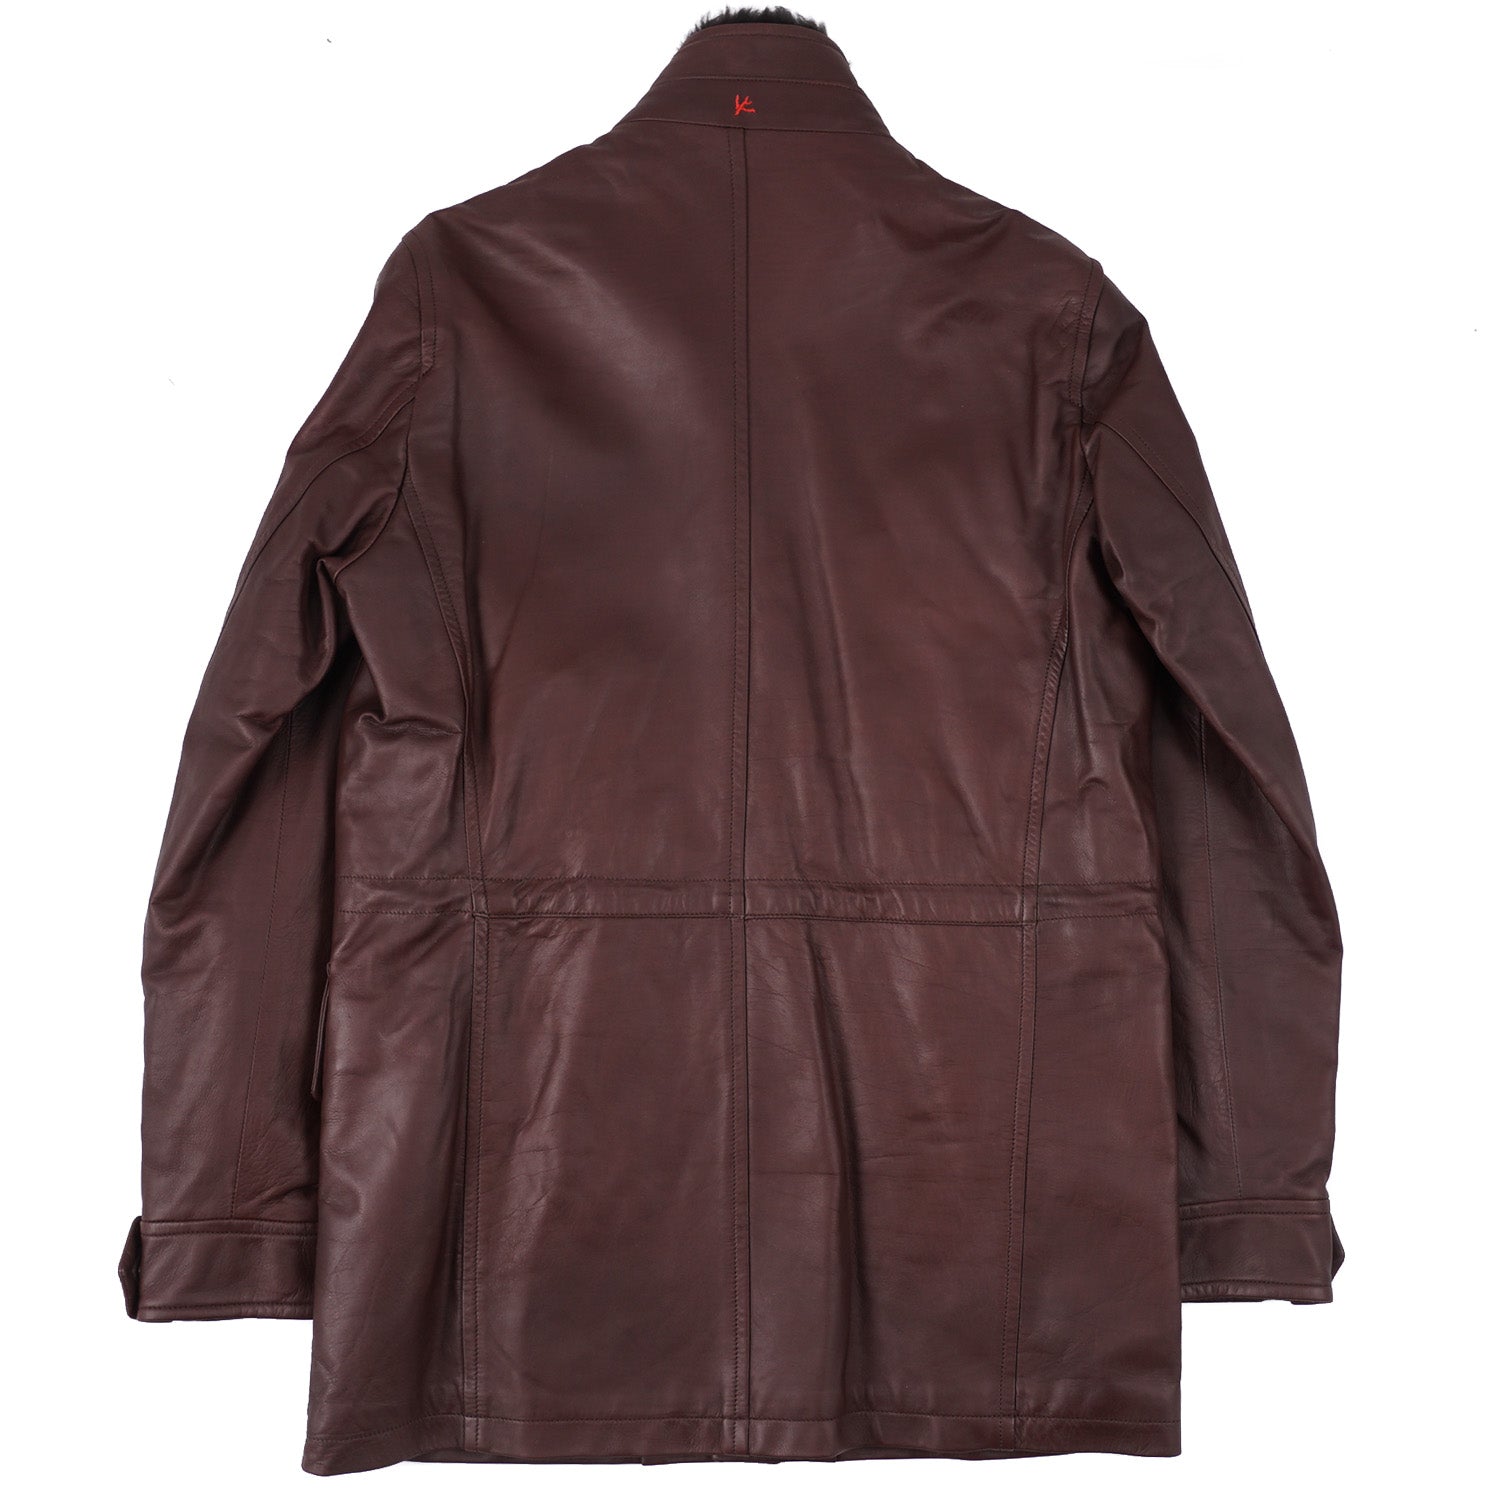 Isaia Baby Buffalo Leather Jacket with Fur Collar - Top Shelf Apparel